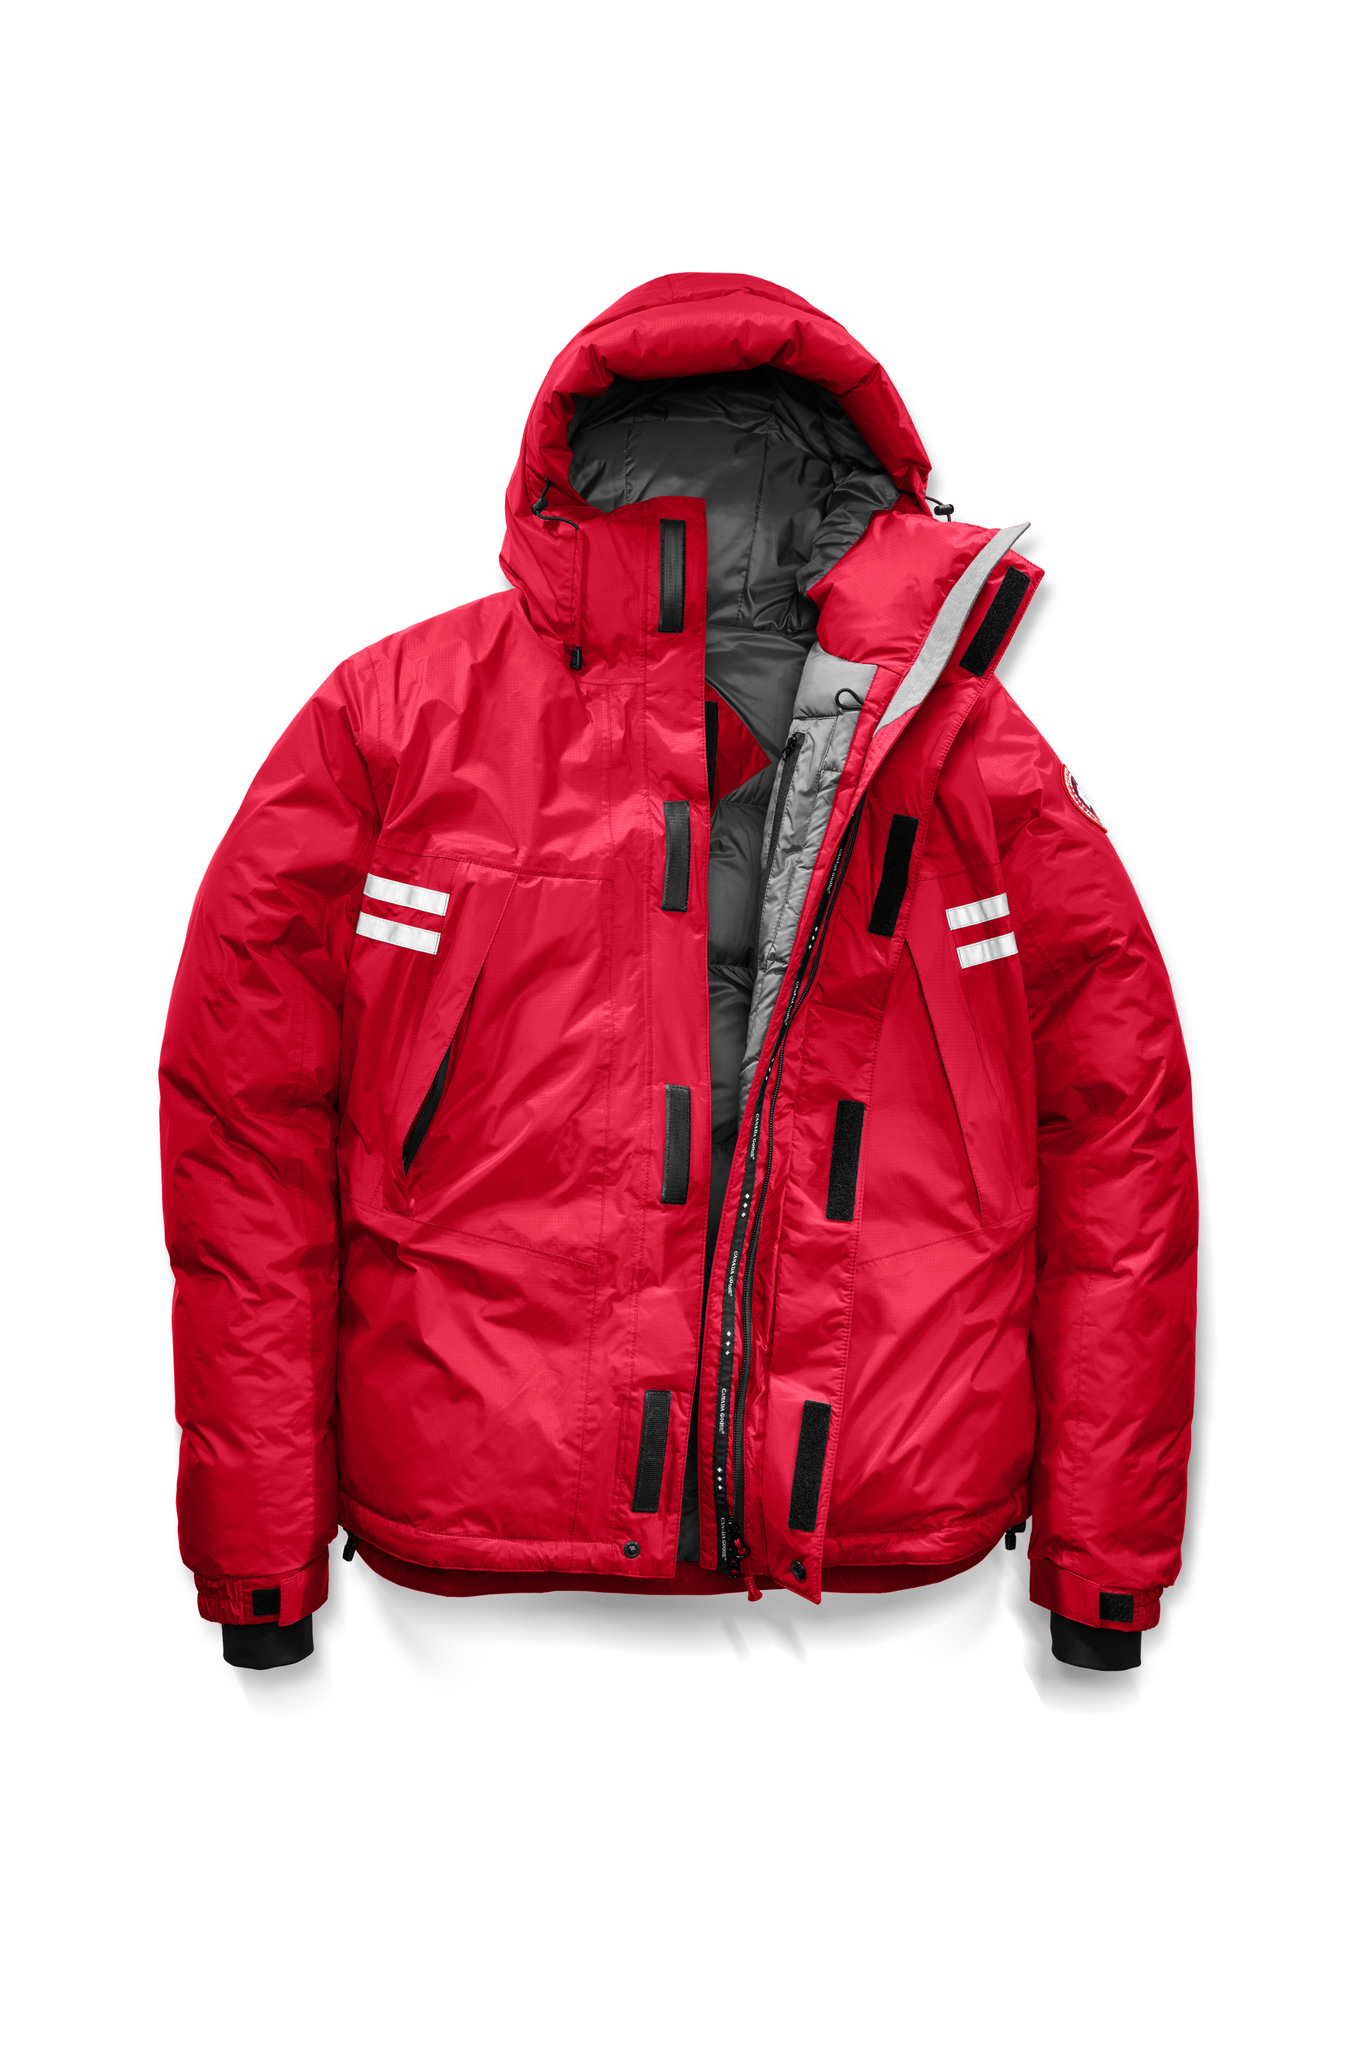 Канадские куртки мужские. Куртки Goose Canada Red. Куртка мужская зимняя Canada. Canadian куртка мужская зимняя. Канадская фирма курток.